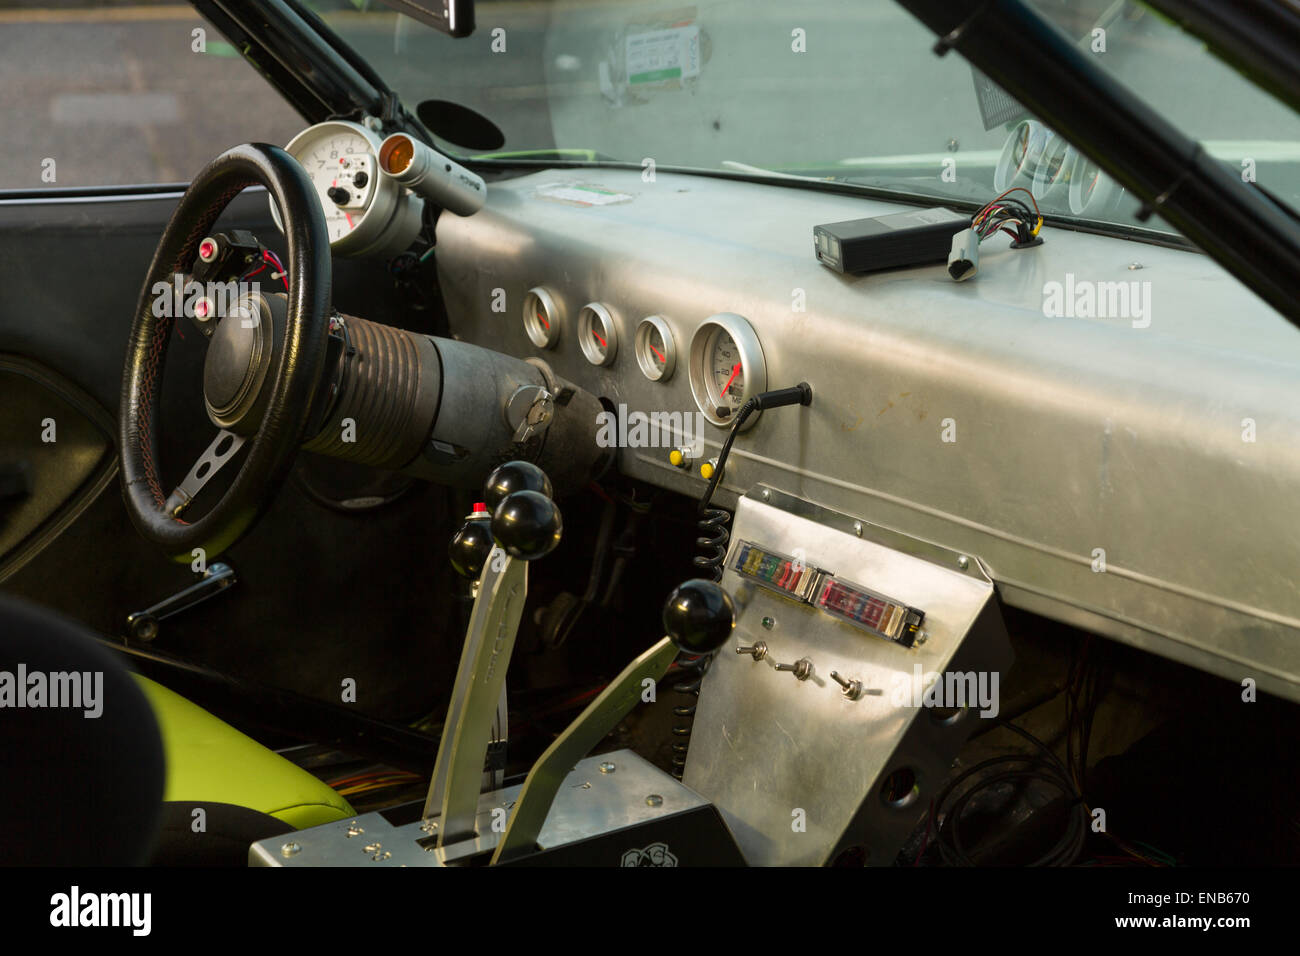 Plymouth Barracuda Drag Car with Mopar Engine Stock Photo